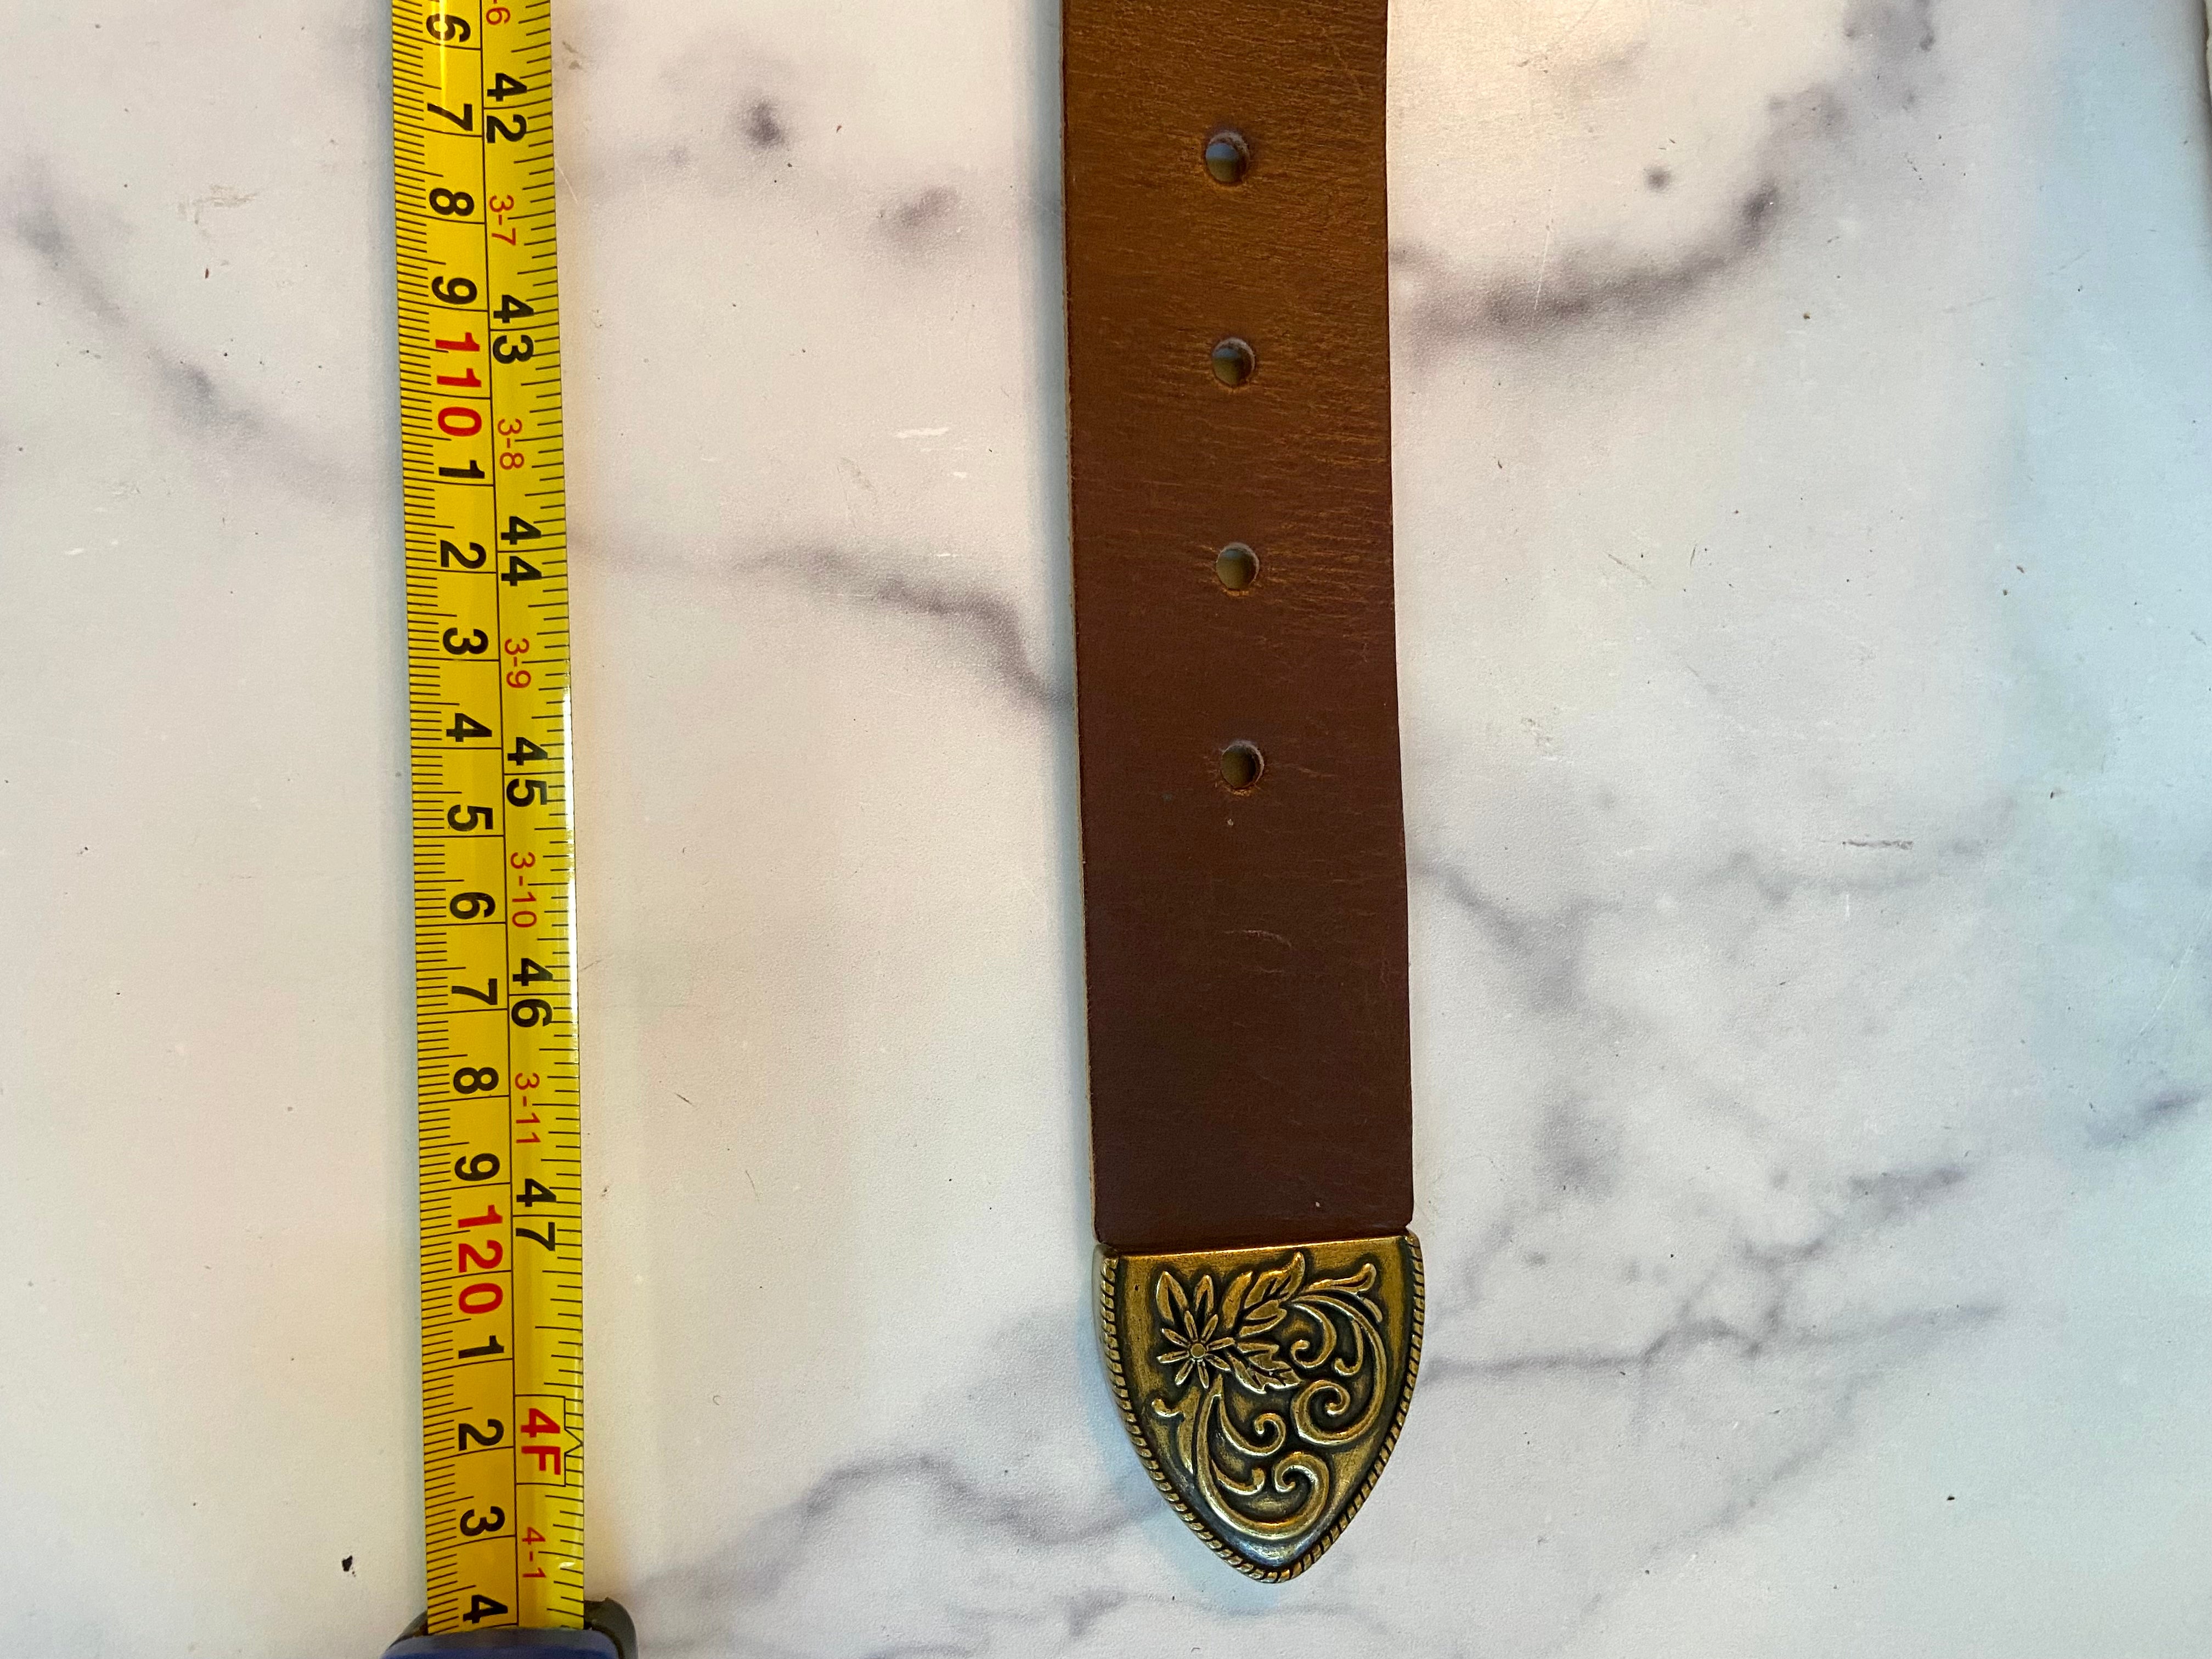 Big bronze buckle leather belt